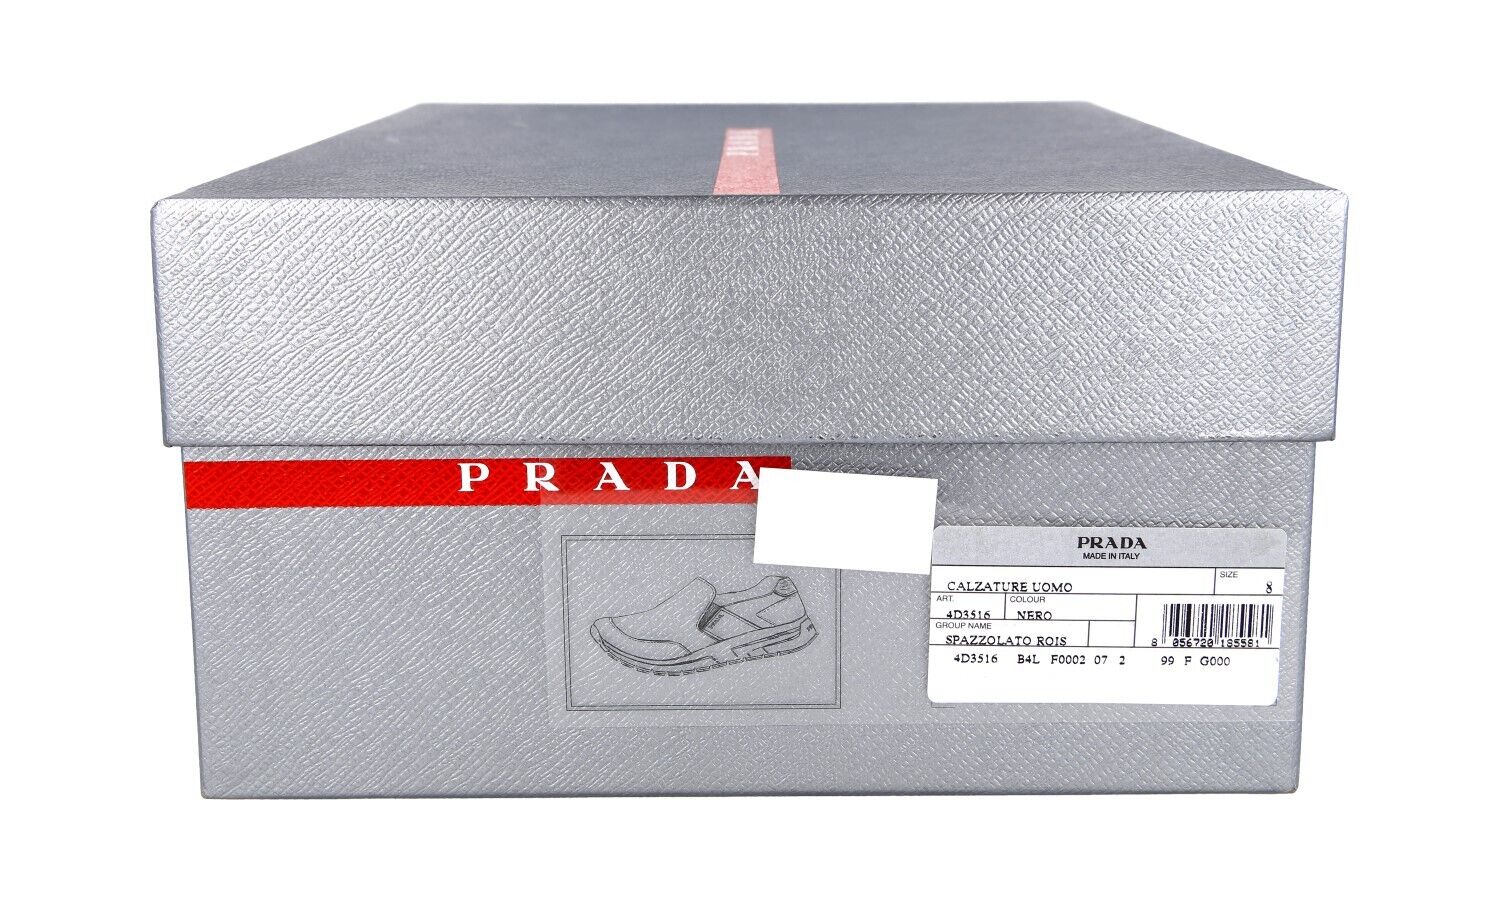 LUXURY PRADA PRAX 01 SNEAKERS SHOES 4D3516 BLACK LEATHER NEW US 9 